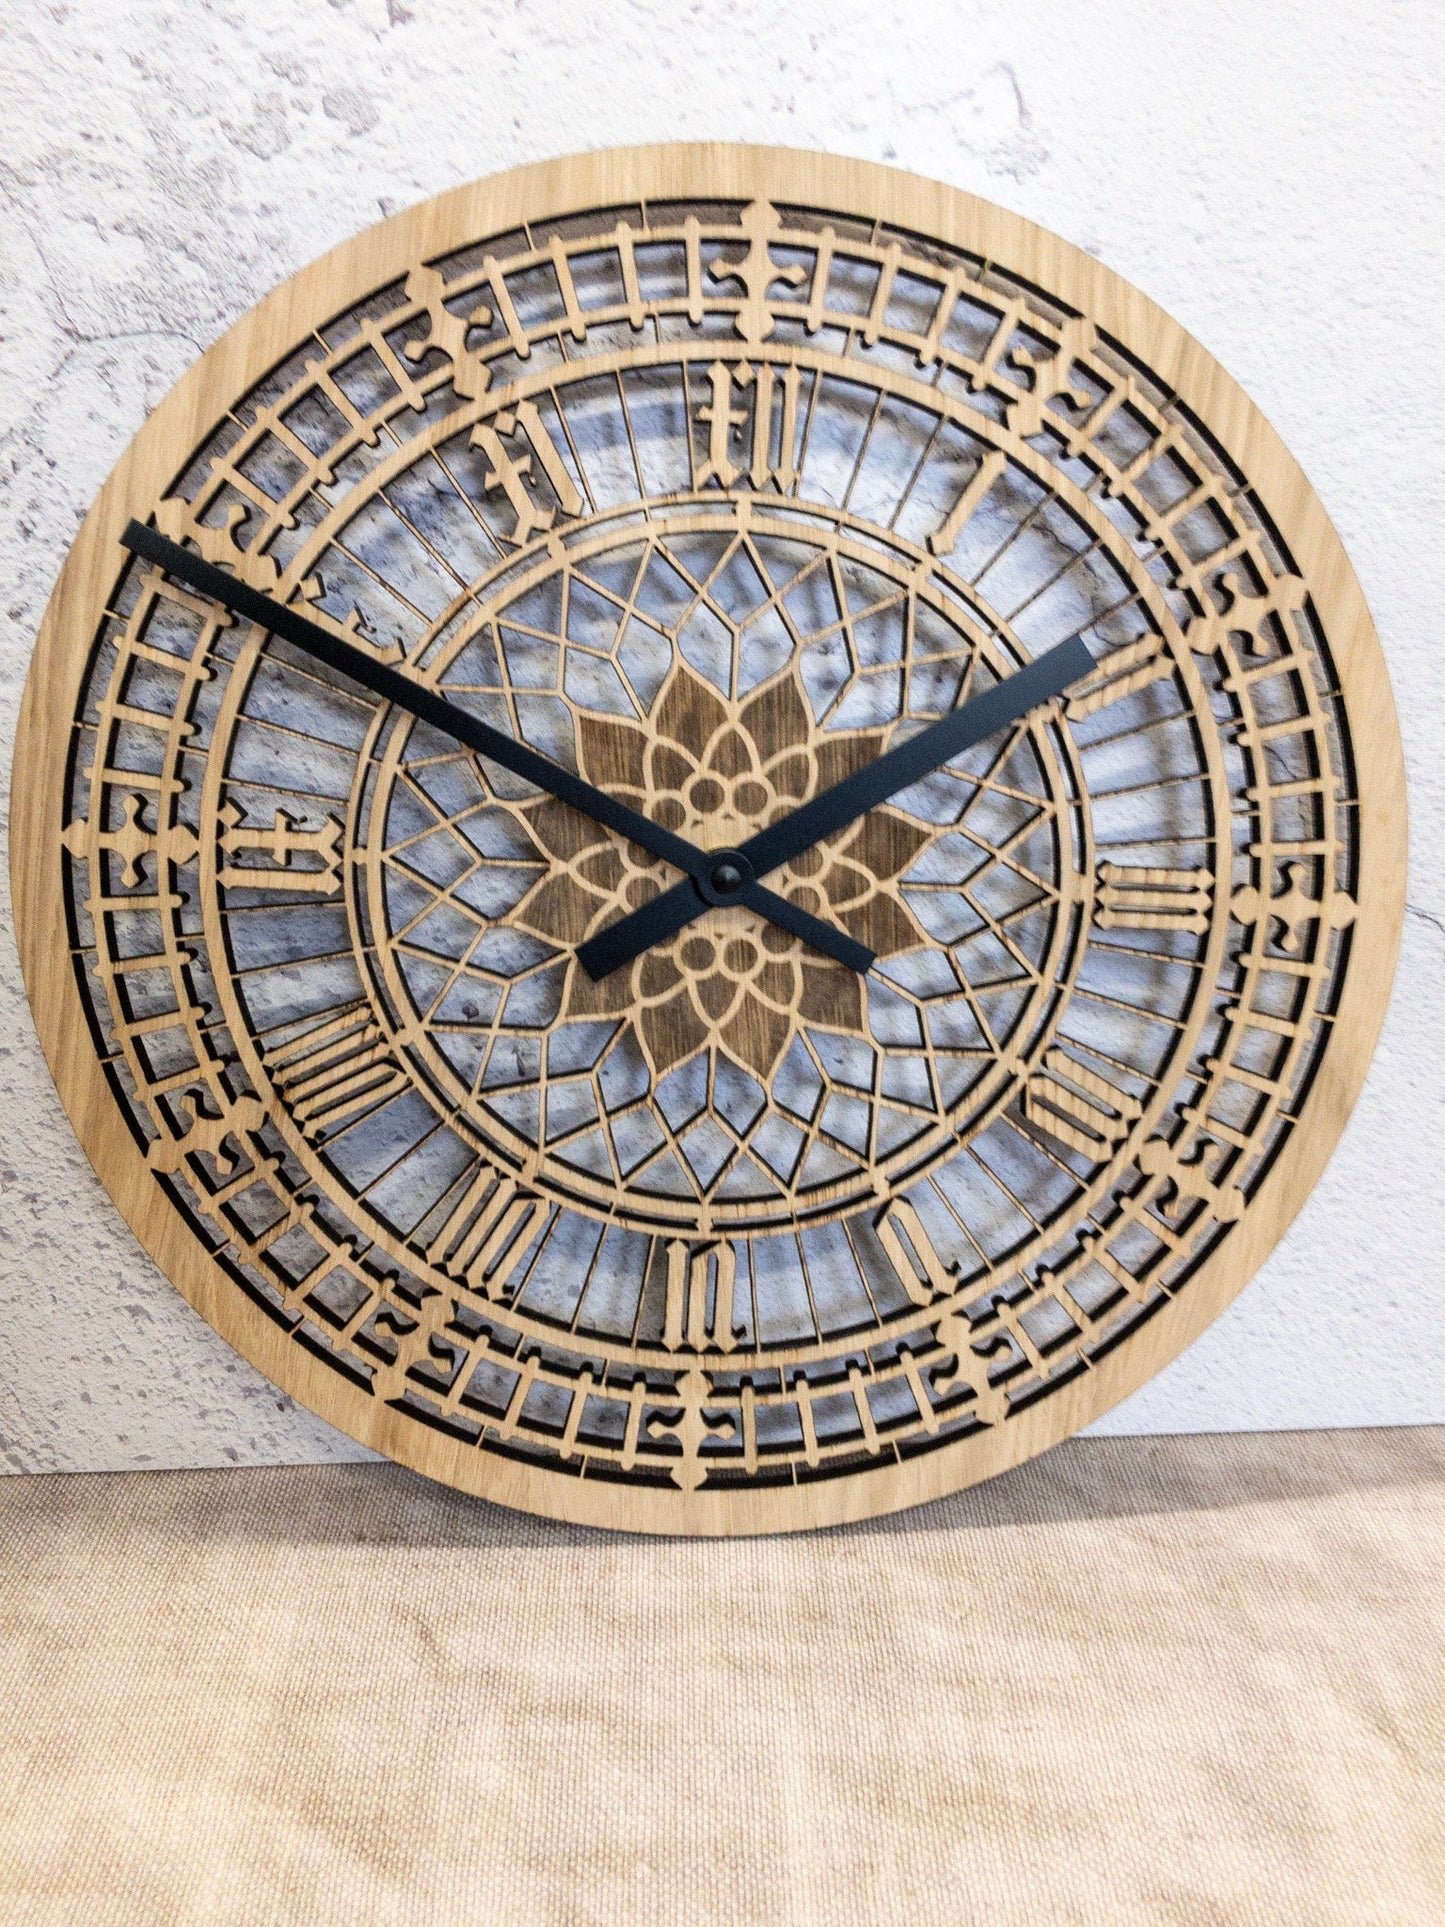 Big Ben Clock - real oak face - London Gift - large wall clock